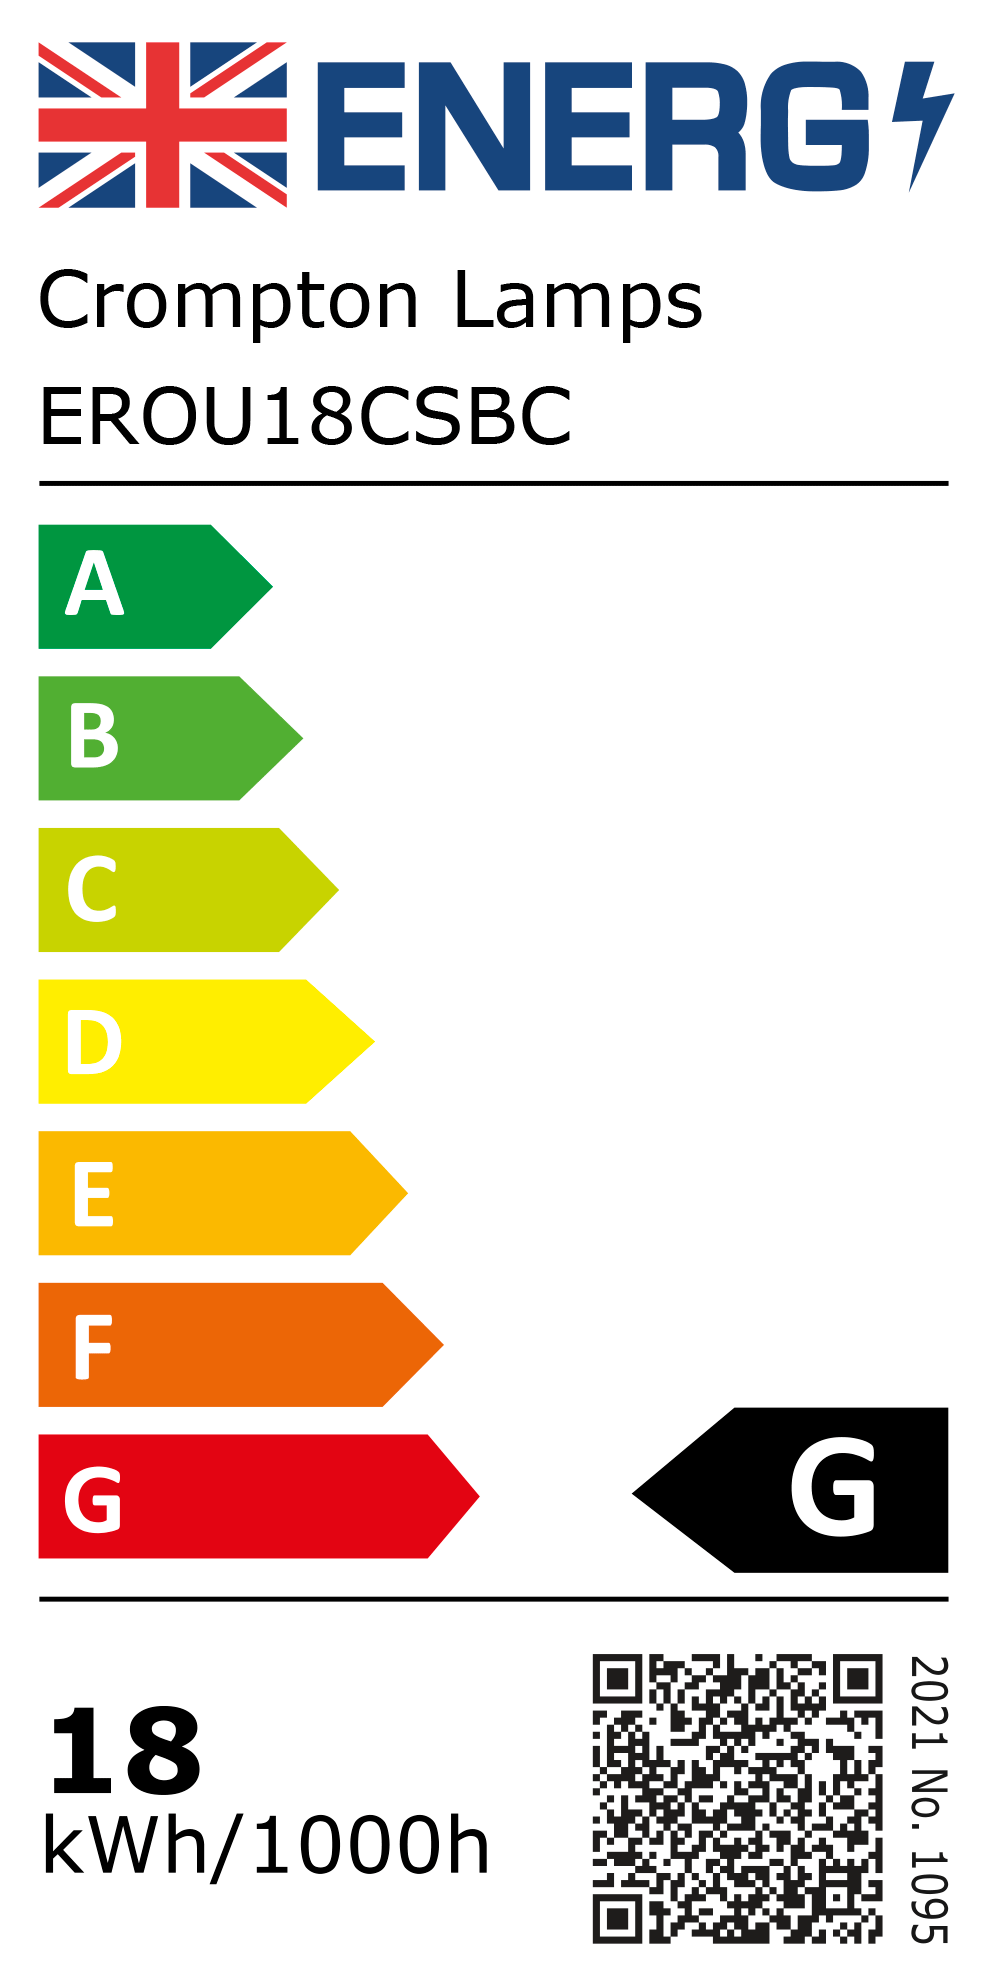 New 2021 Energy Rating Label: Stock Code EROU18CSBC